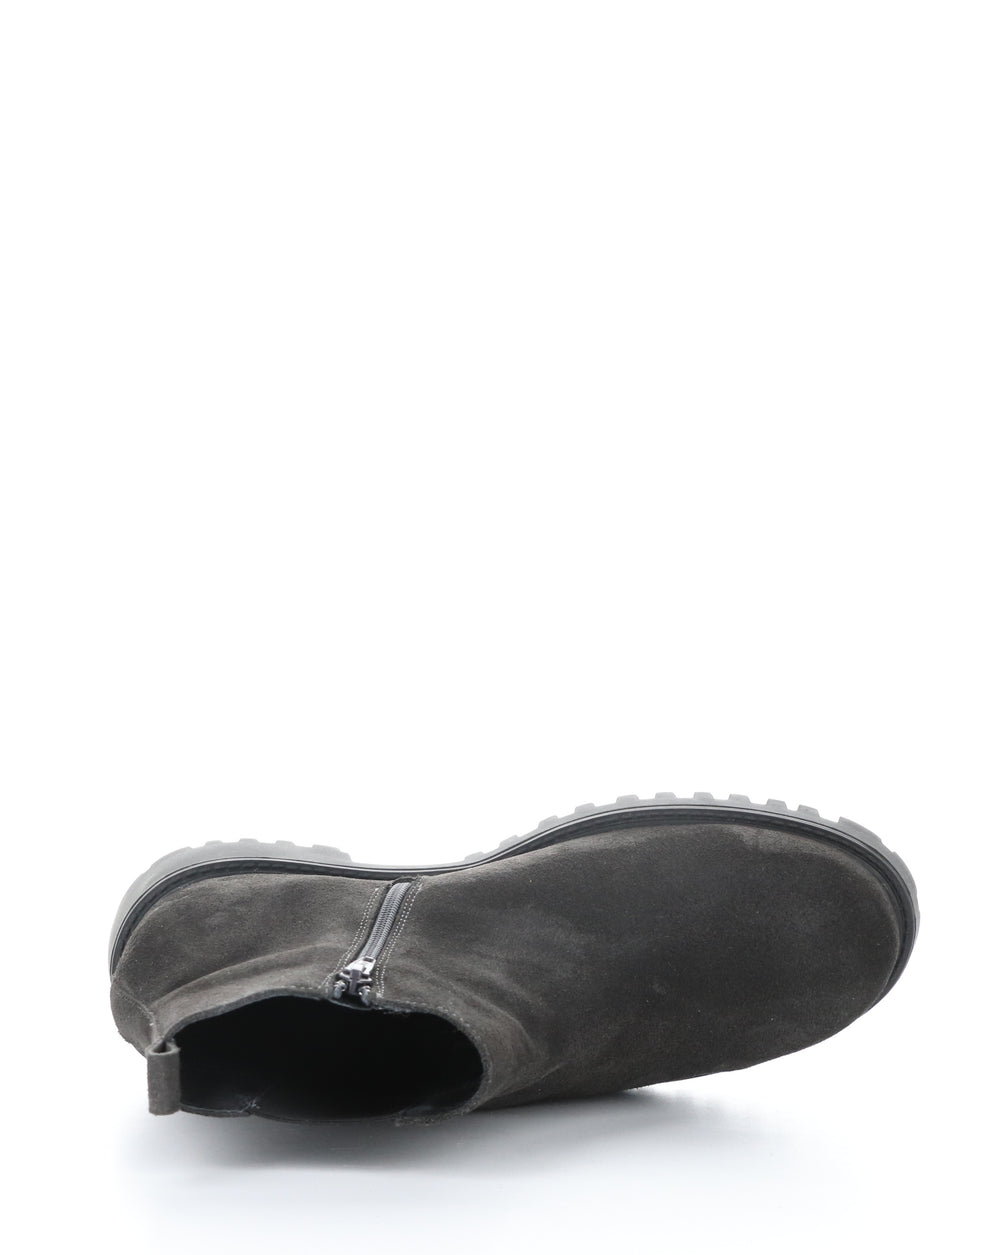 DAX GREY/BLACK Round Toe Boots